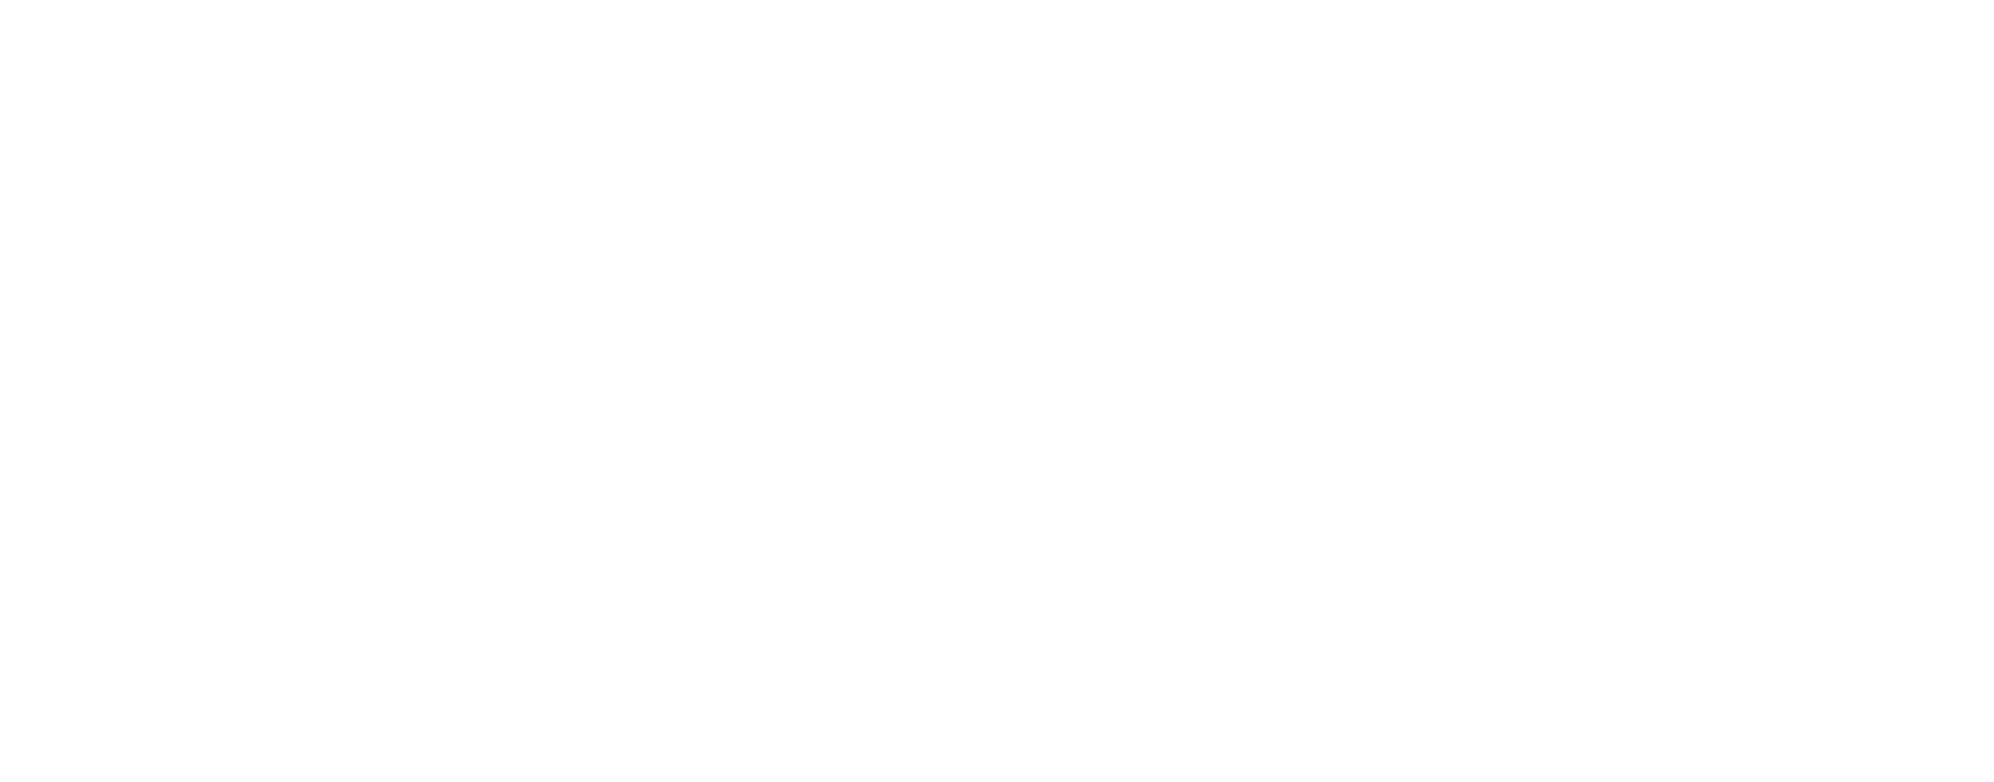 OpenFF Toolkit 0.15.0+0.gb824475.dirty documentation logo